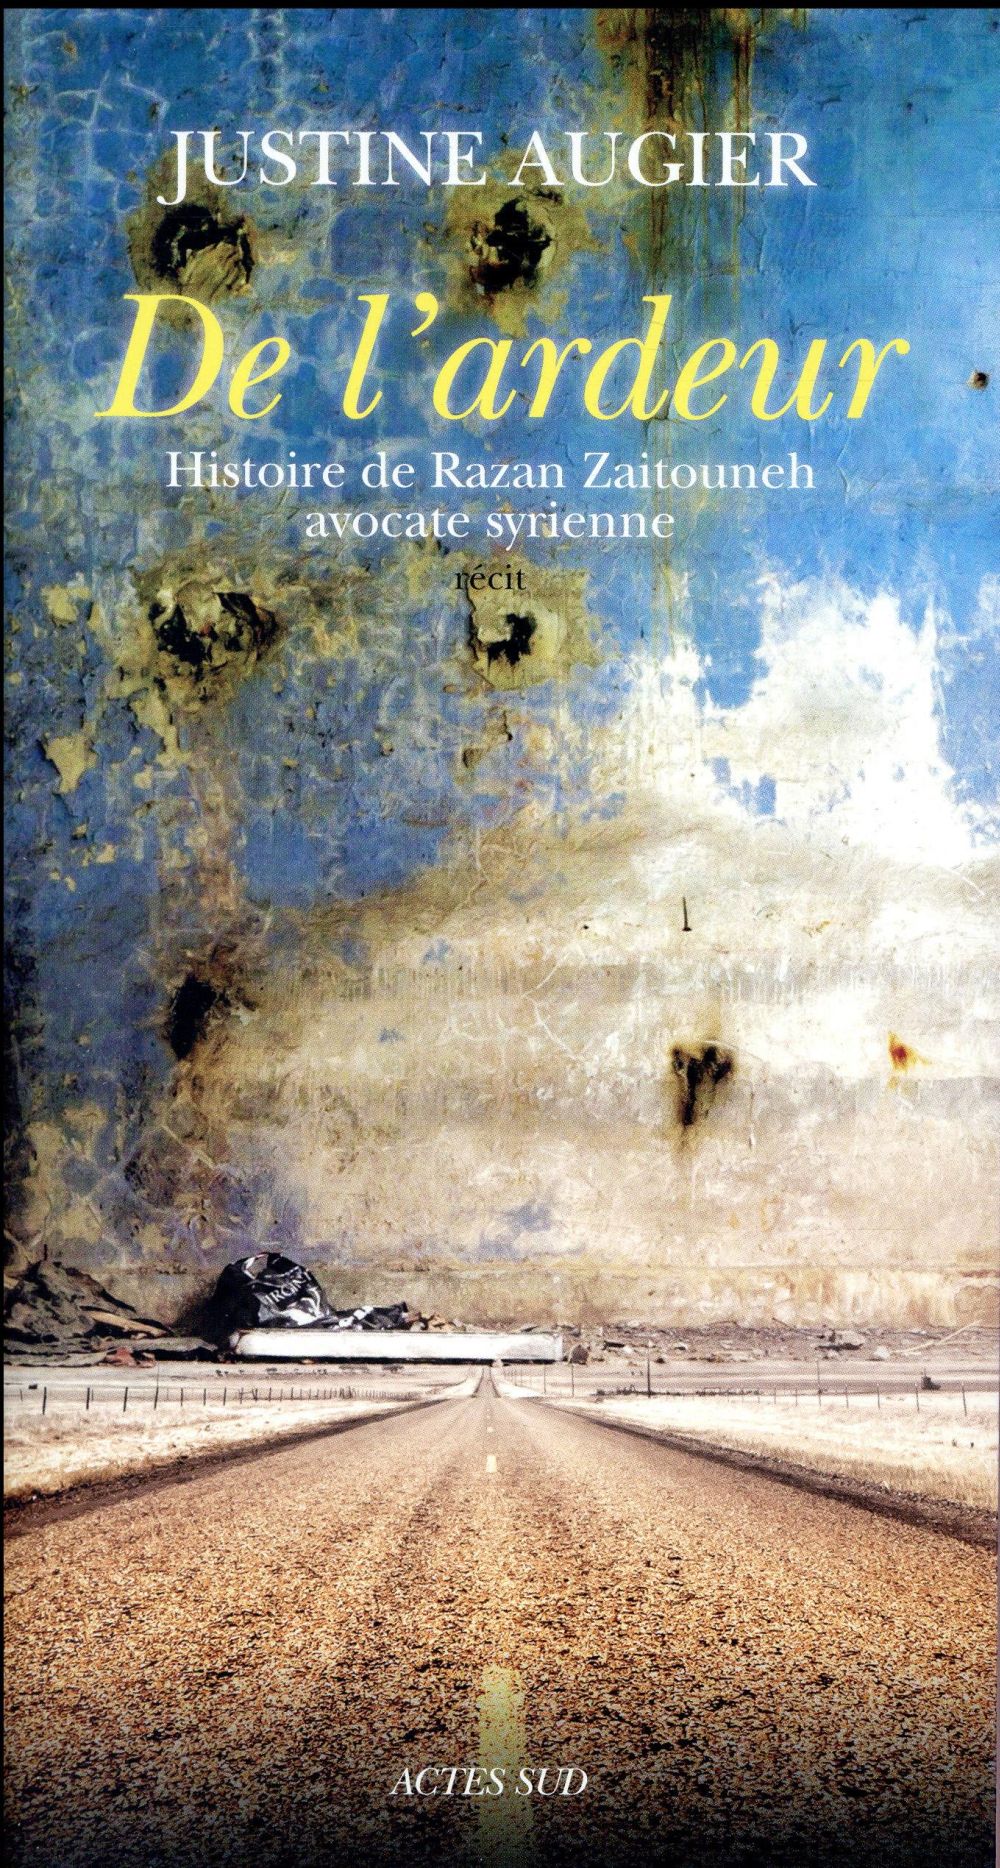 DE L'ARDEUR - HISTOIRE DE RAZAN ZAITOUNEH, AVOCATE SYRIENNE